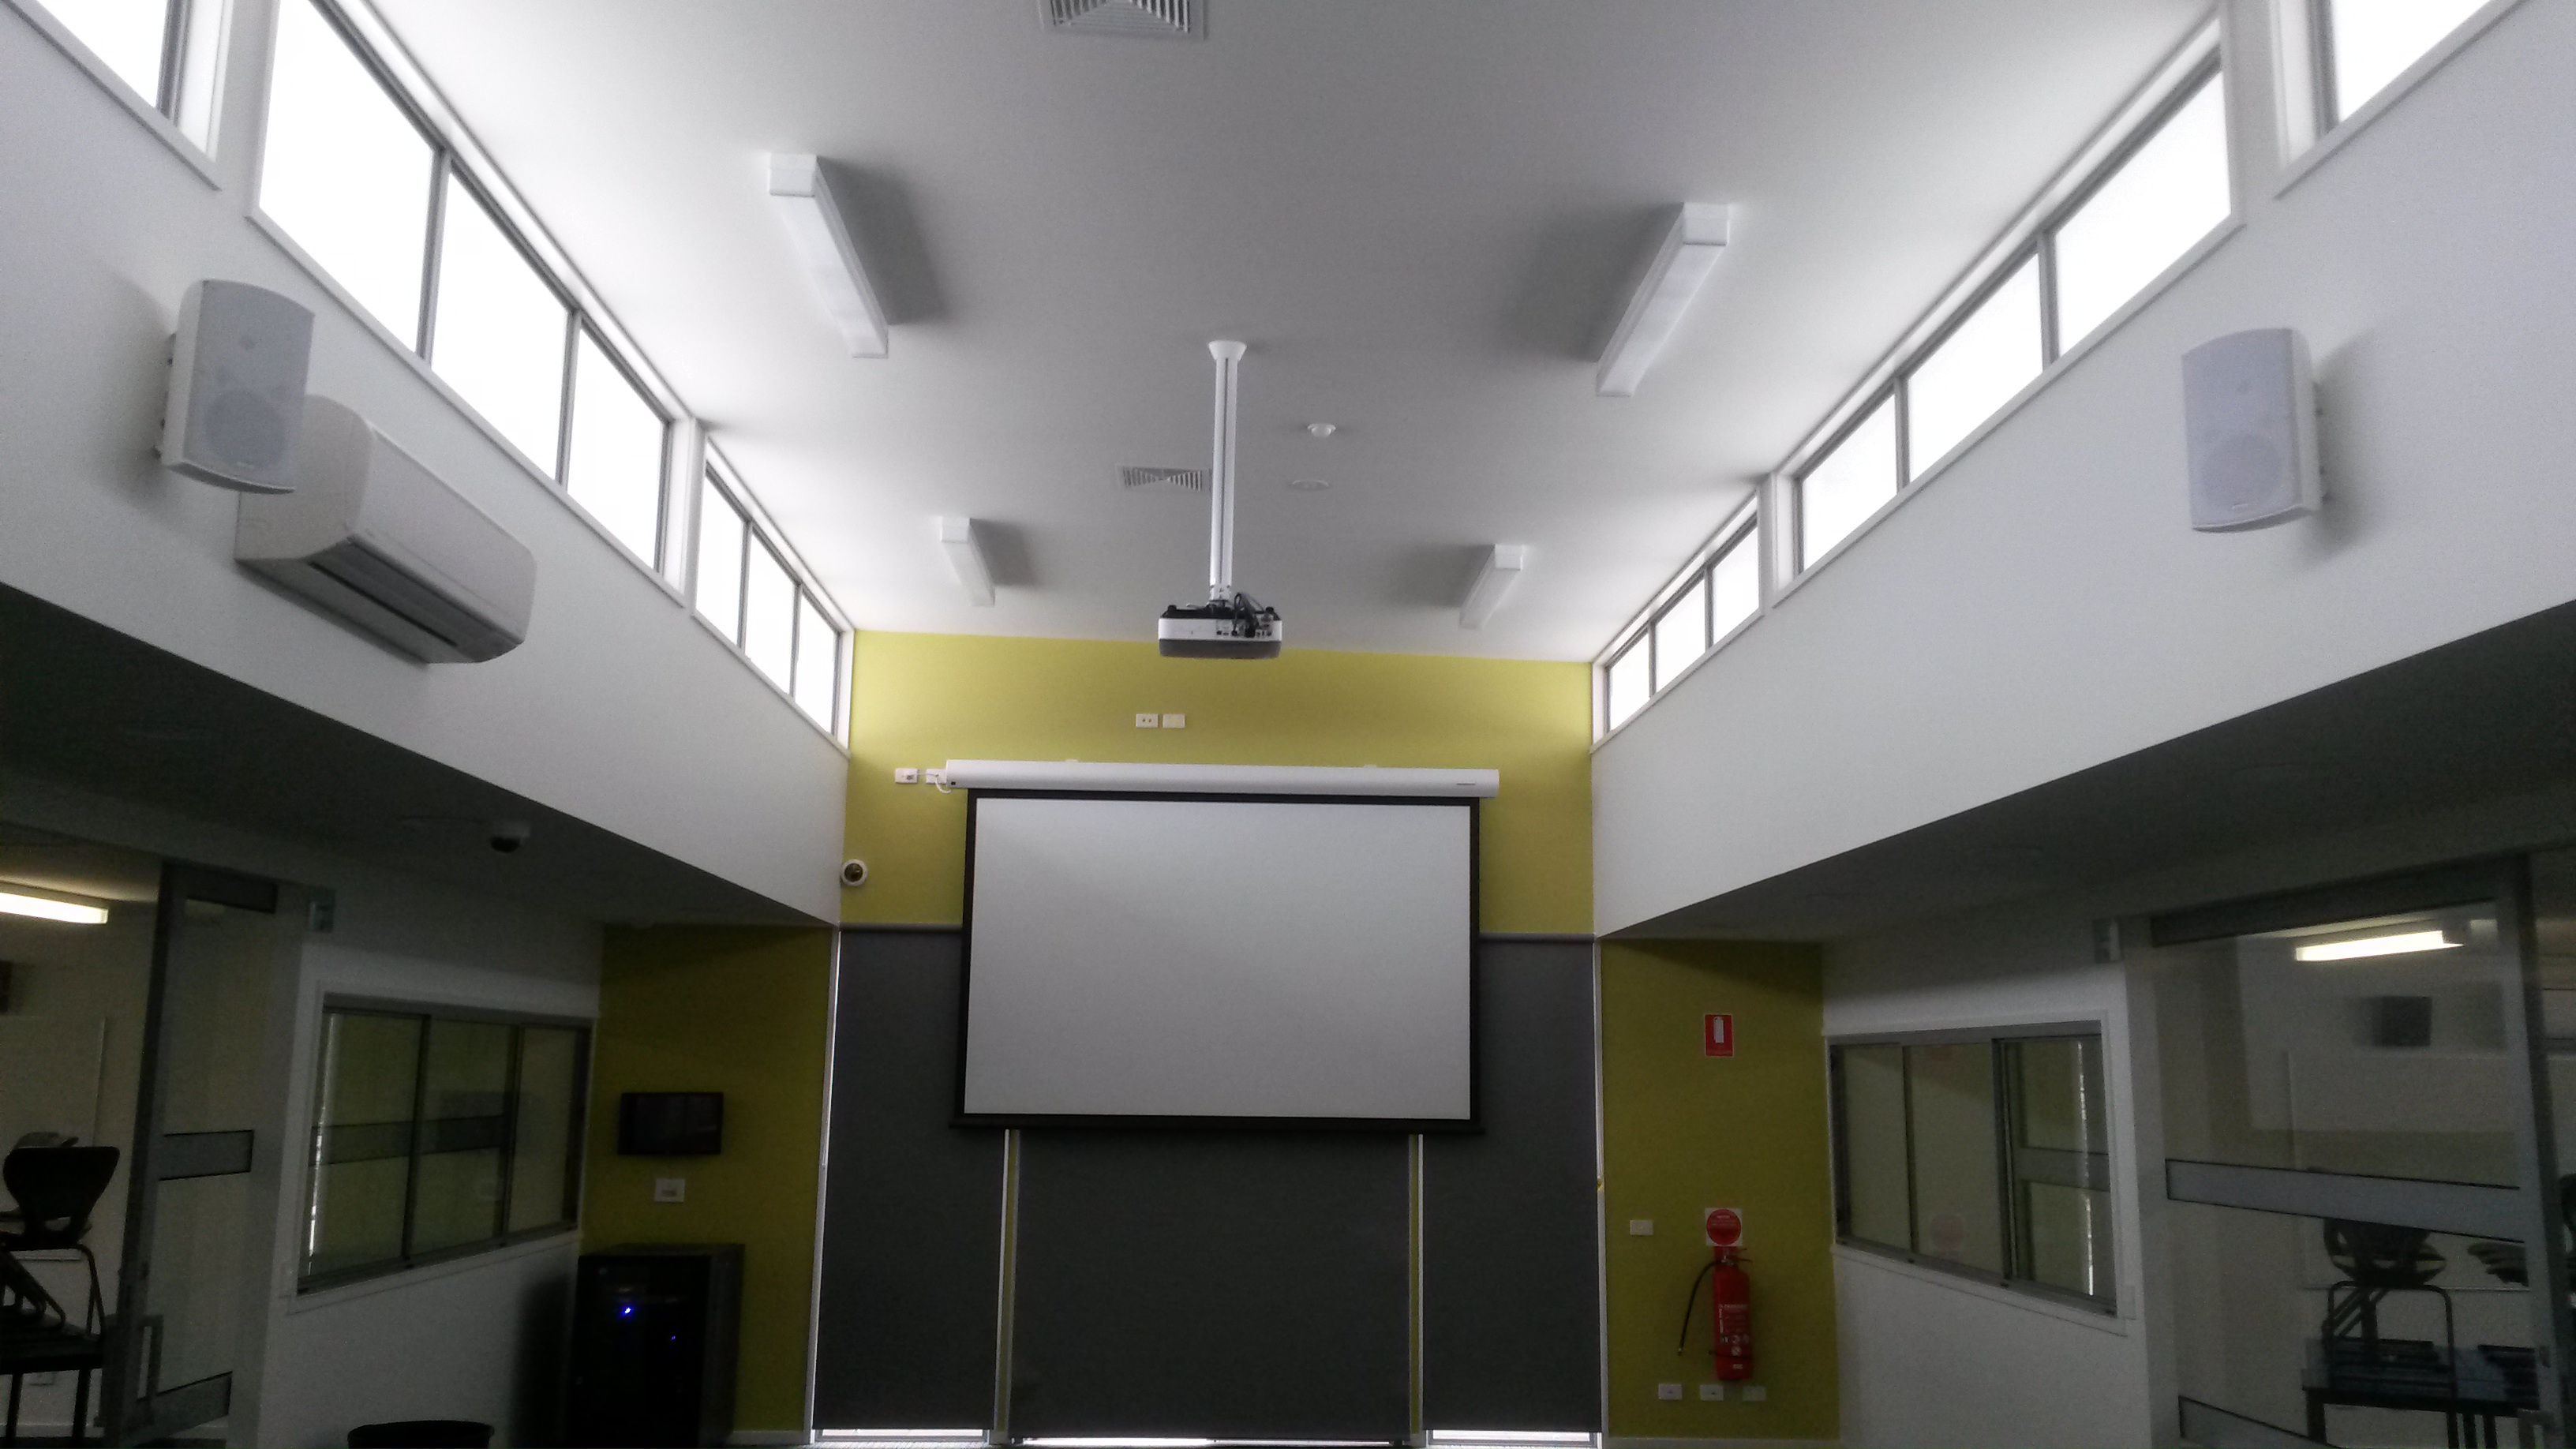 DiscoveryLab™ classroom capture system